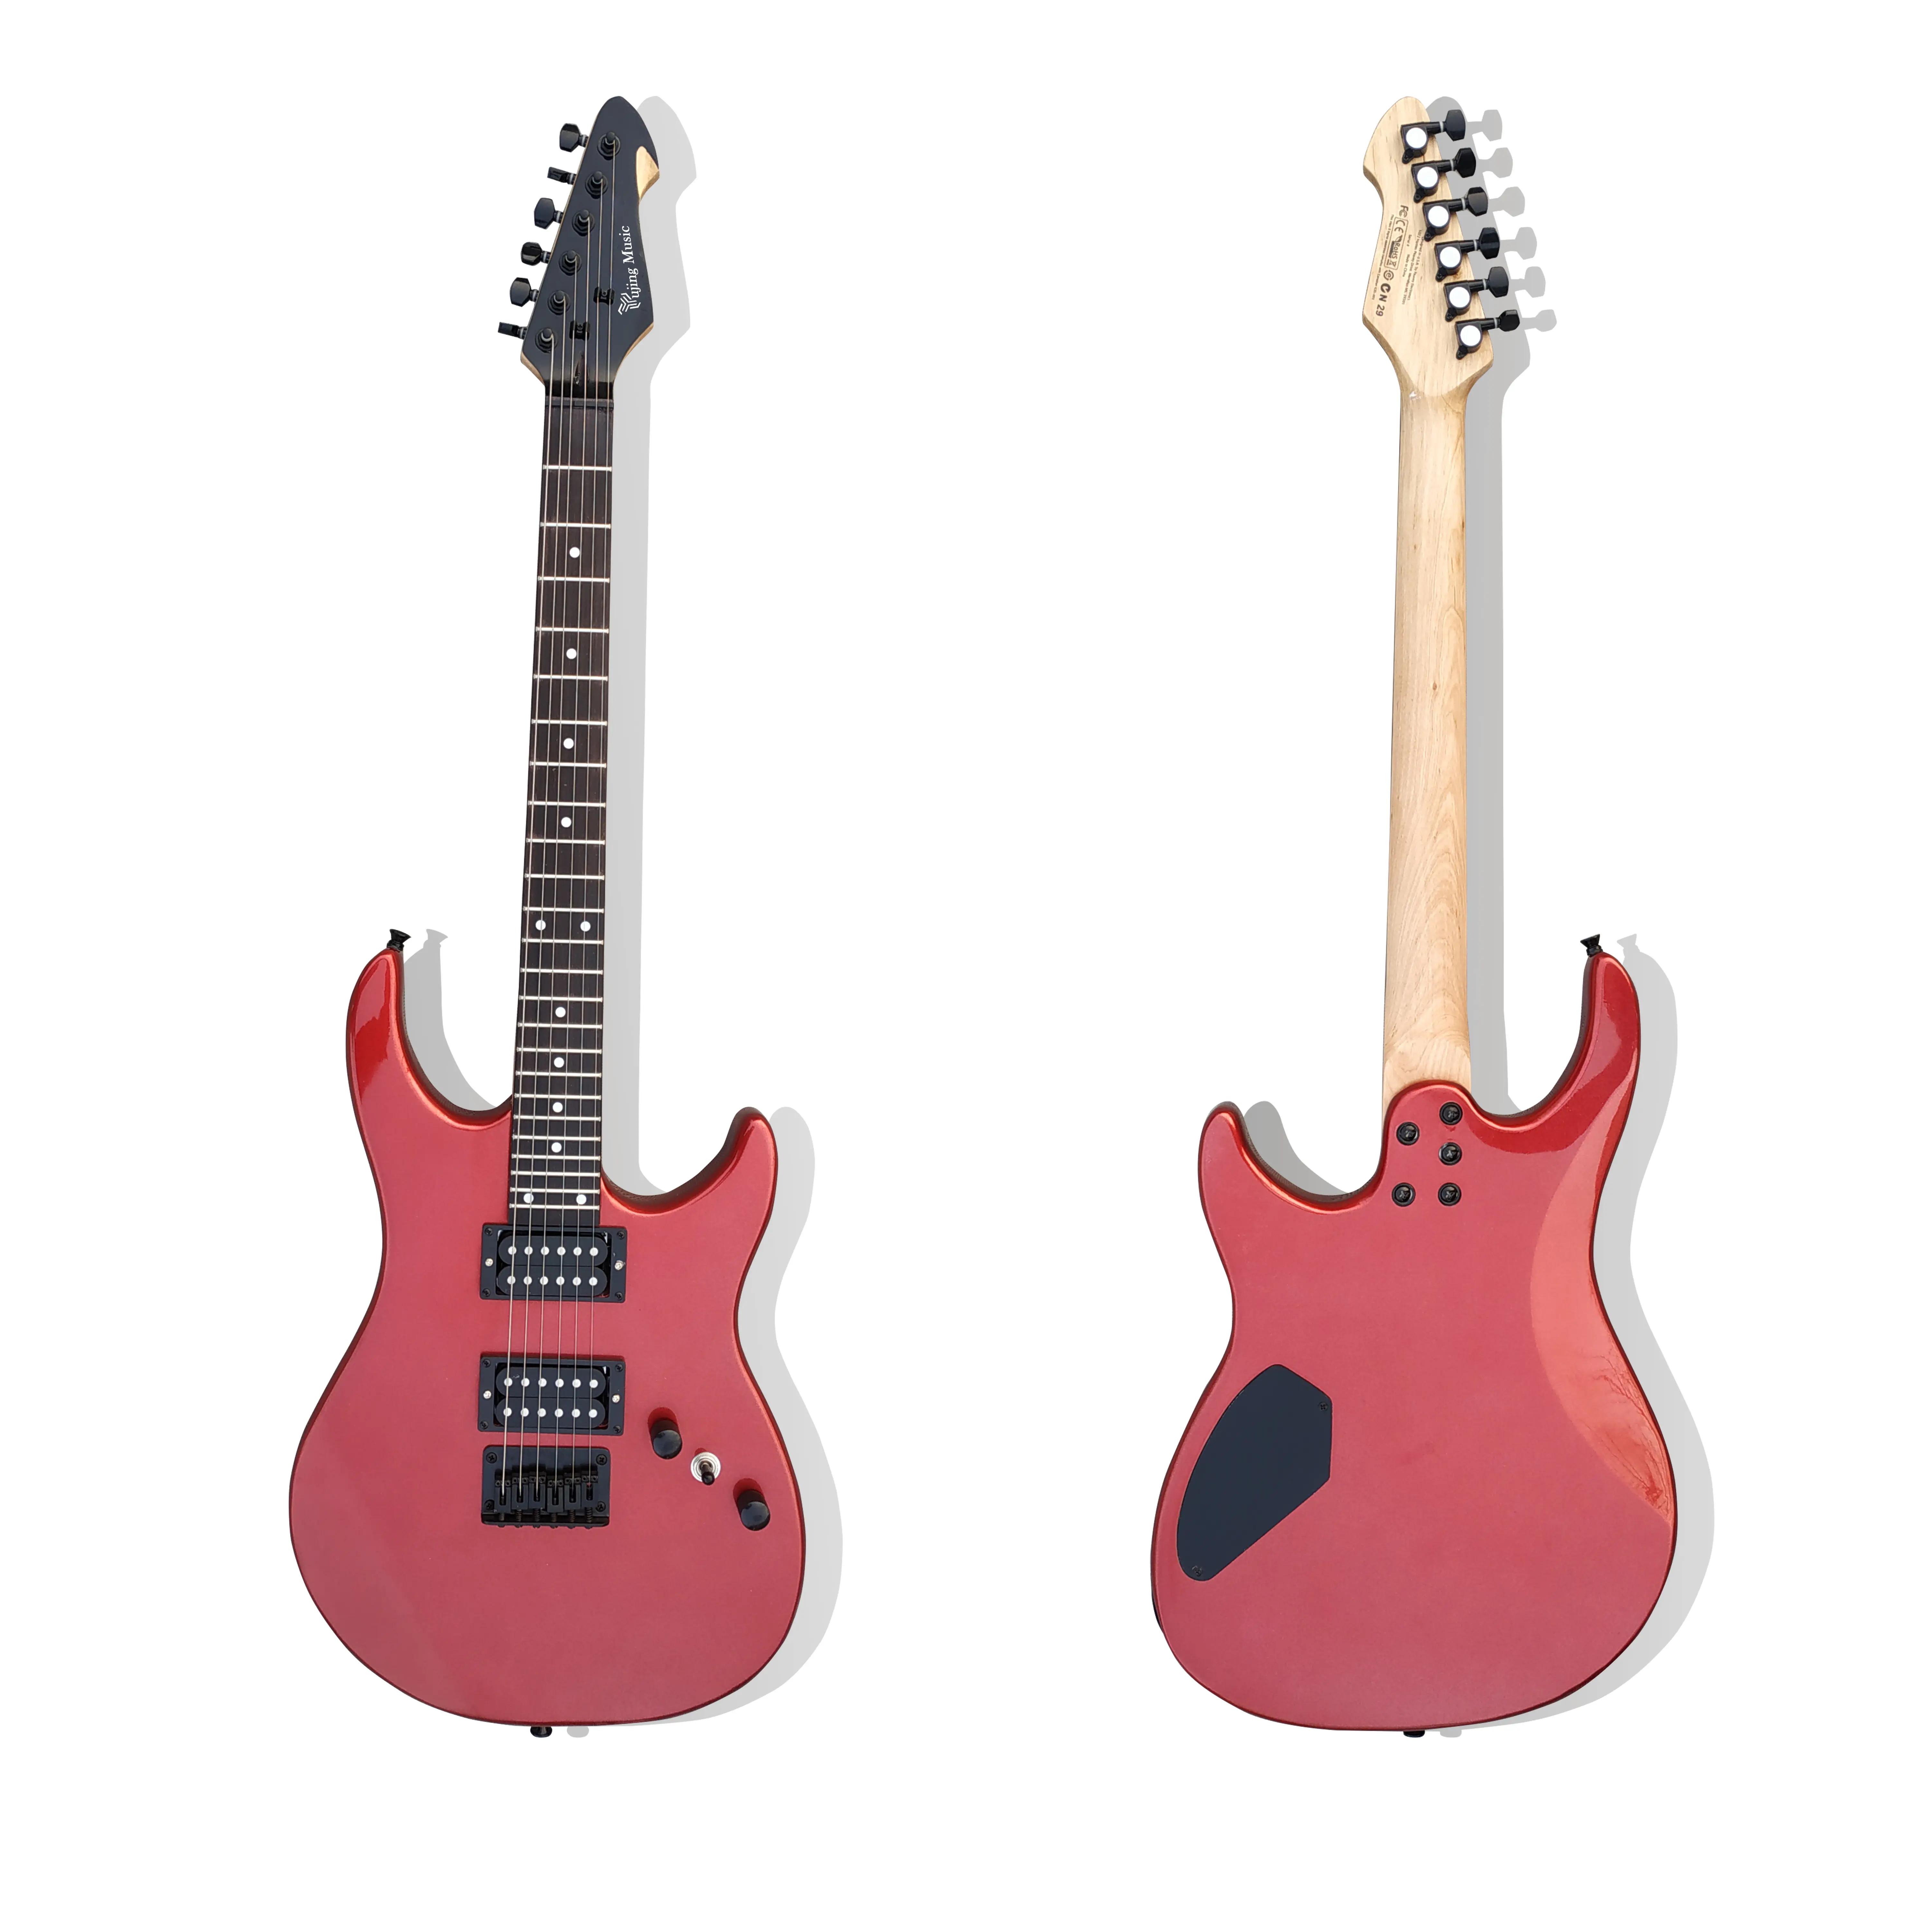 कस्टम फैक्टरी इलेक्ट्रिक गिटार 2 Knobs गिटार सिर है काले इलेक्ट्रिक गिटार